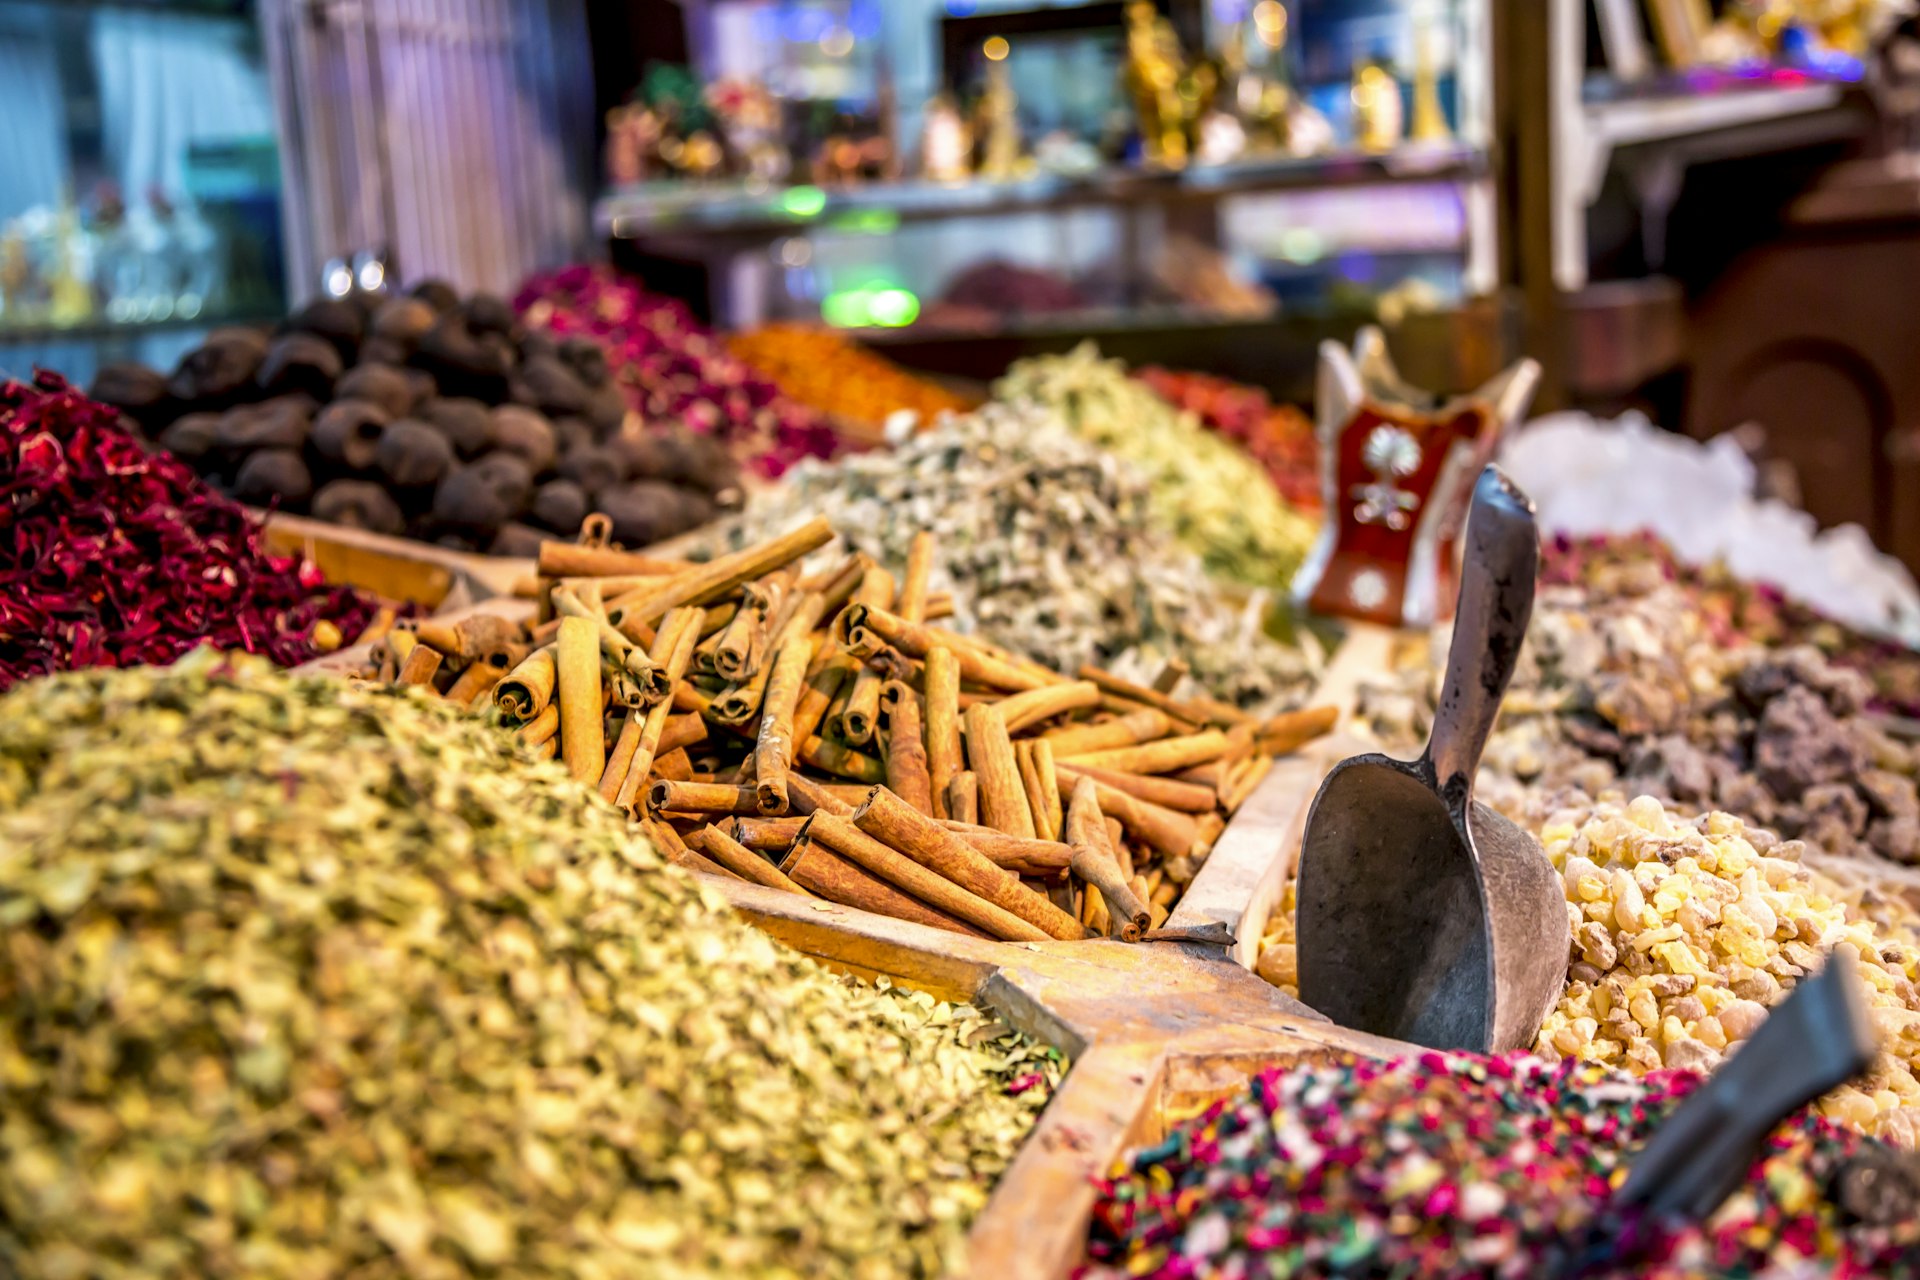 Spice market in Dubai. Image by Gargolas / Getty Images